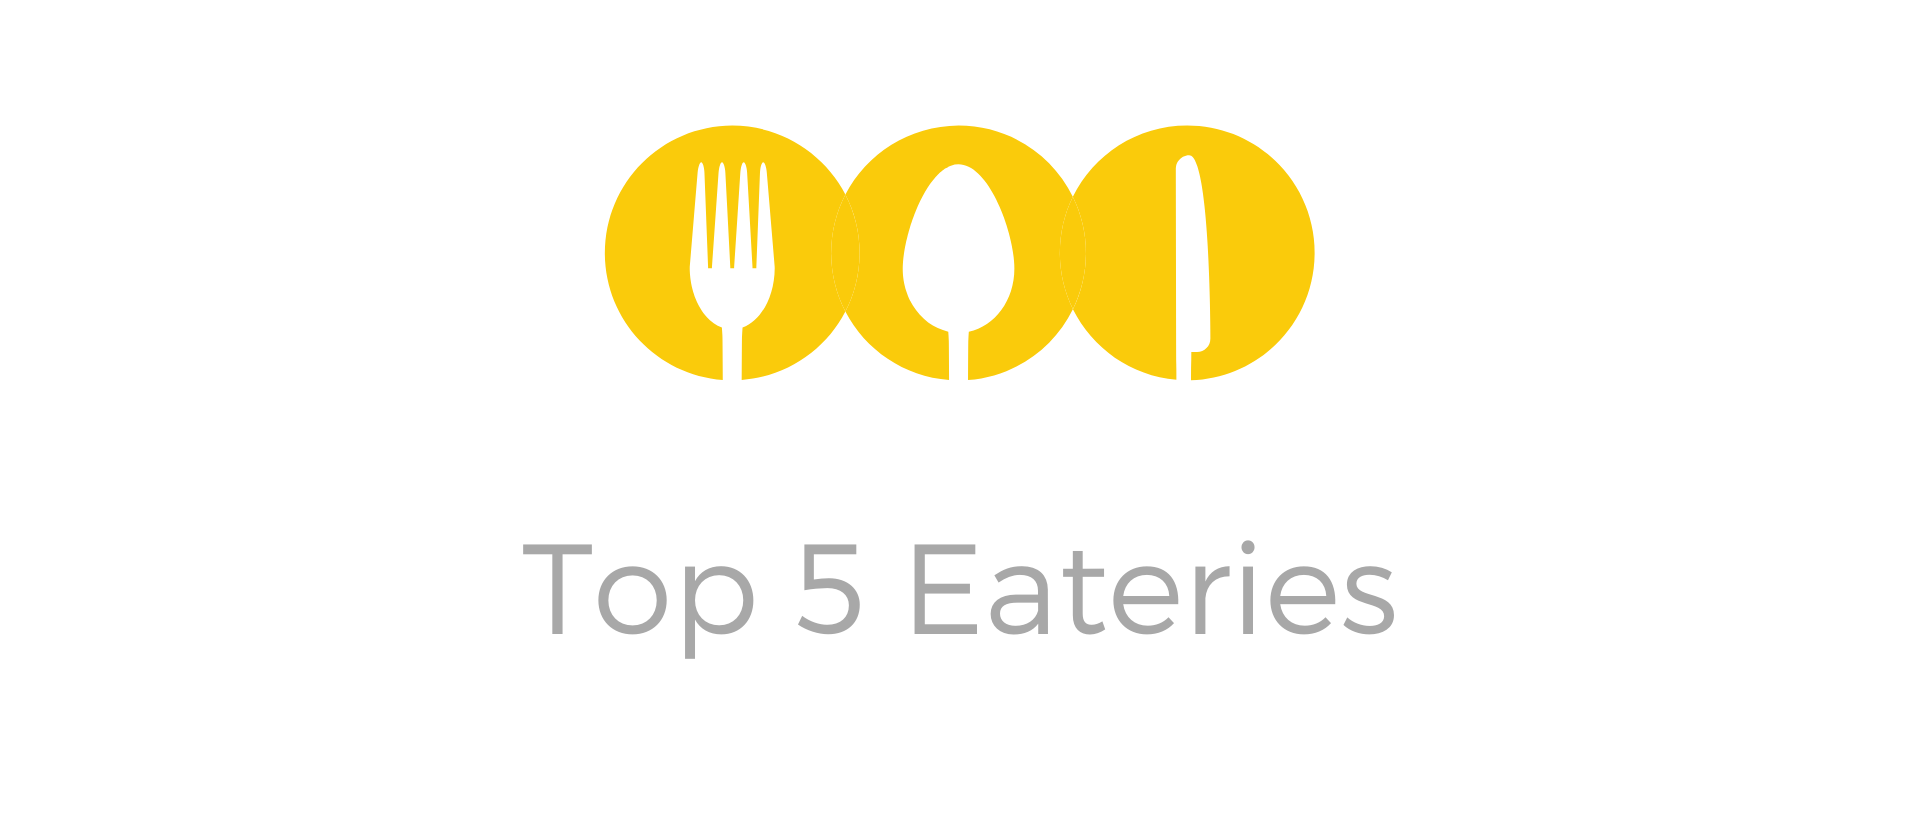 Top 5 Eateries